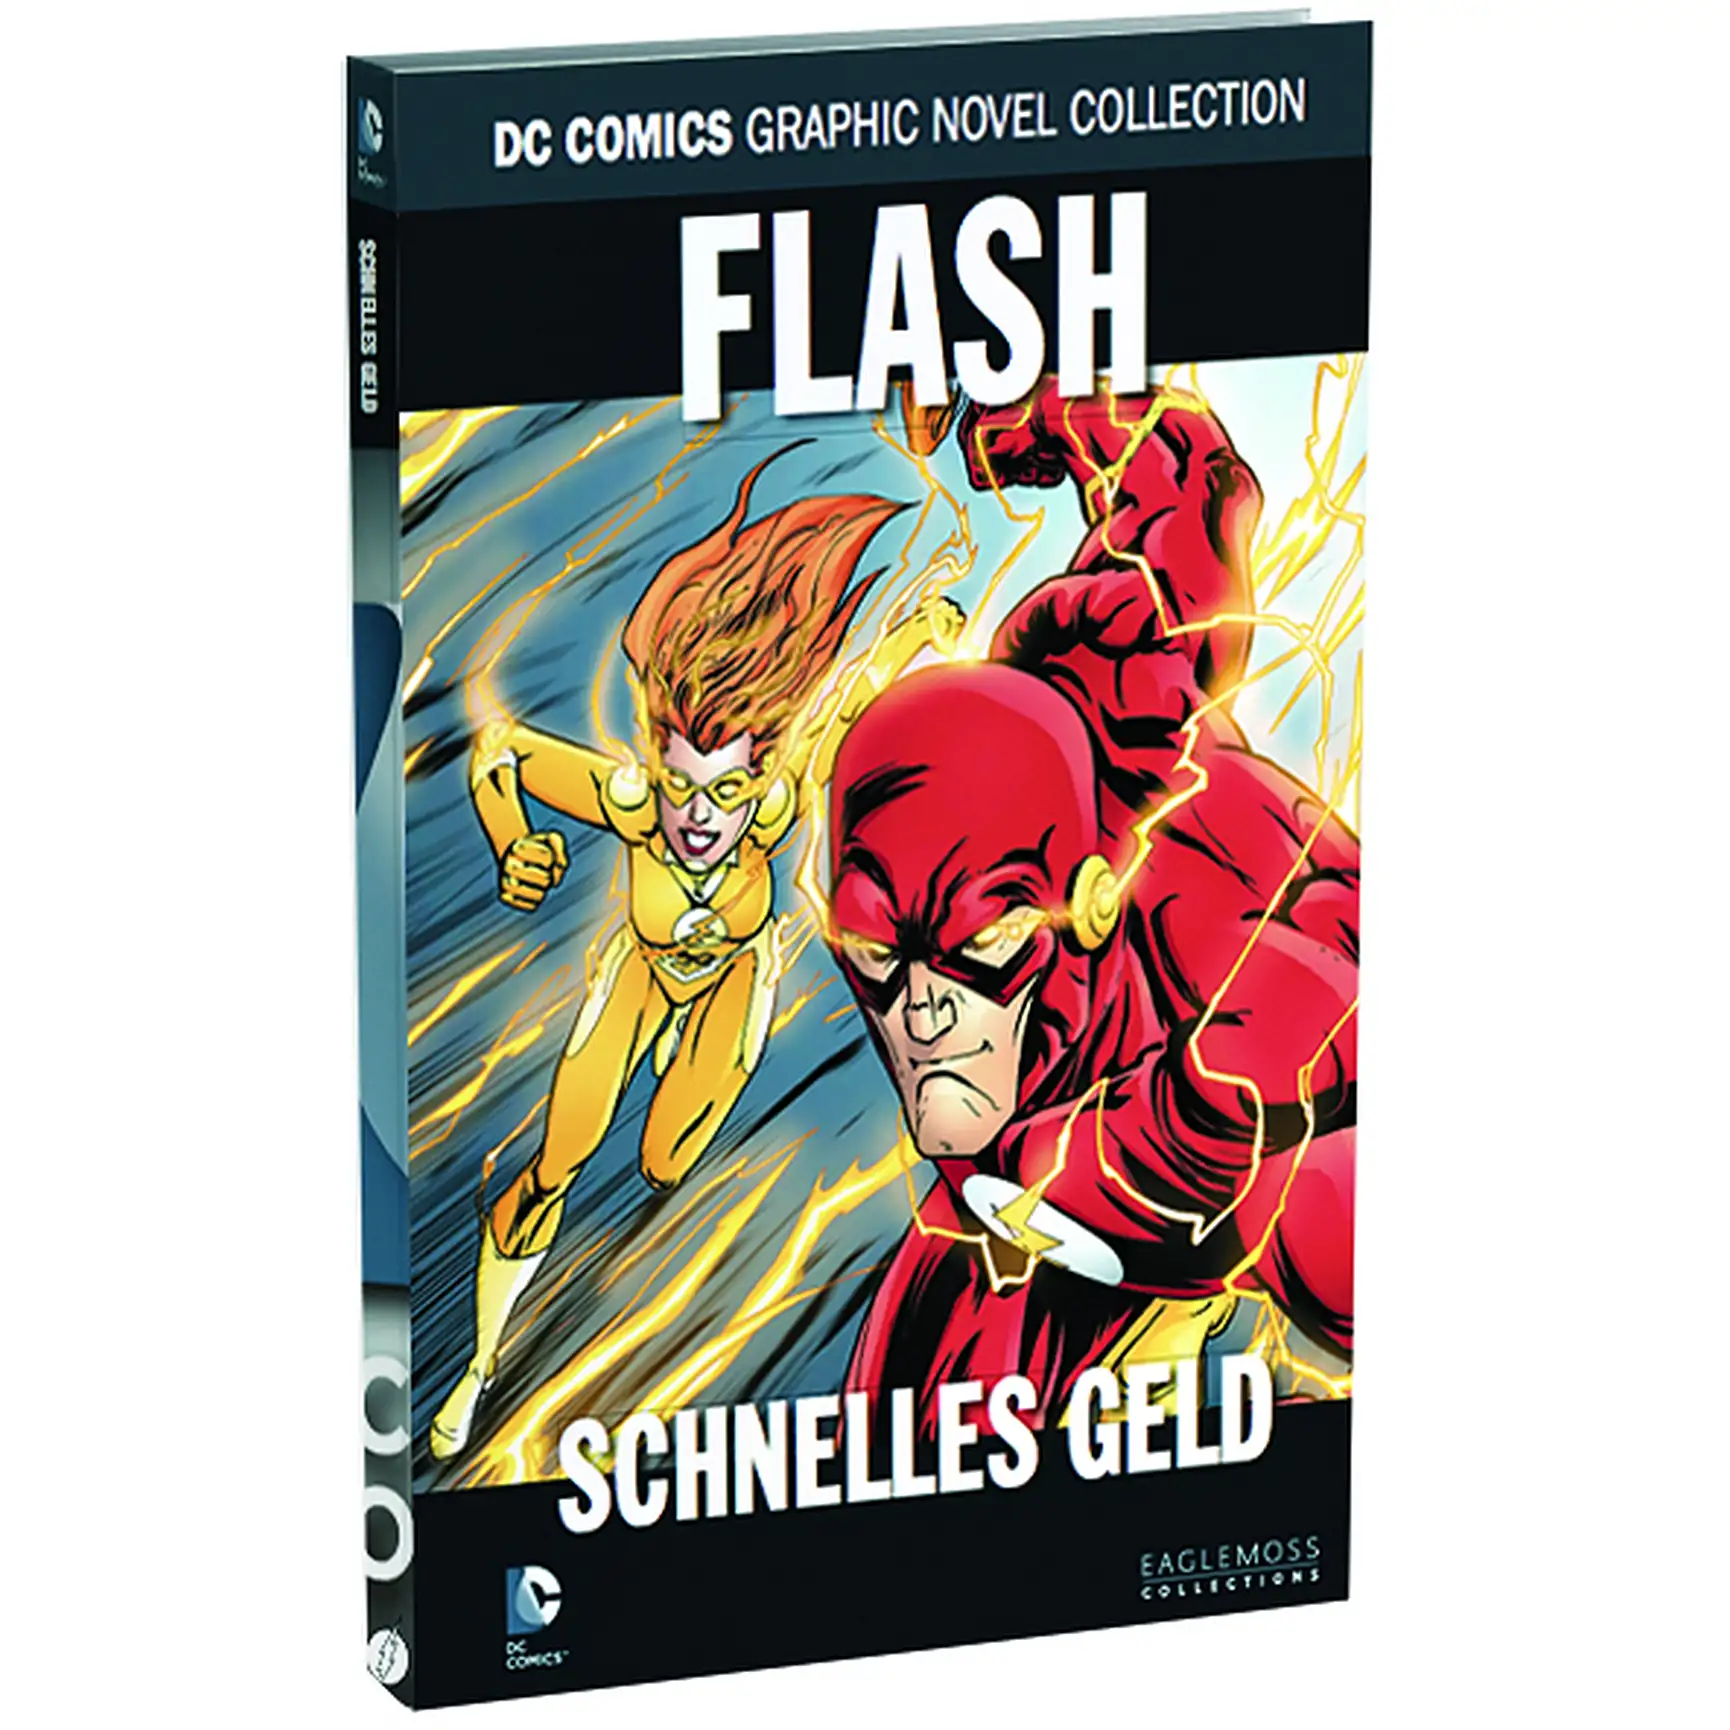 DC Comics Graphic Novel Collection Flash - Schnelles Geld